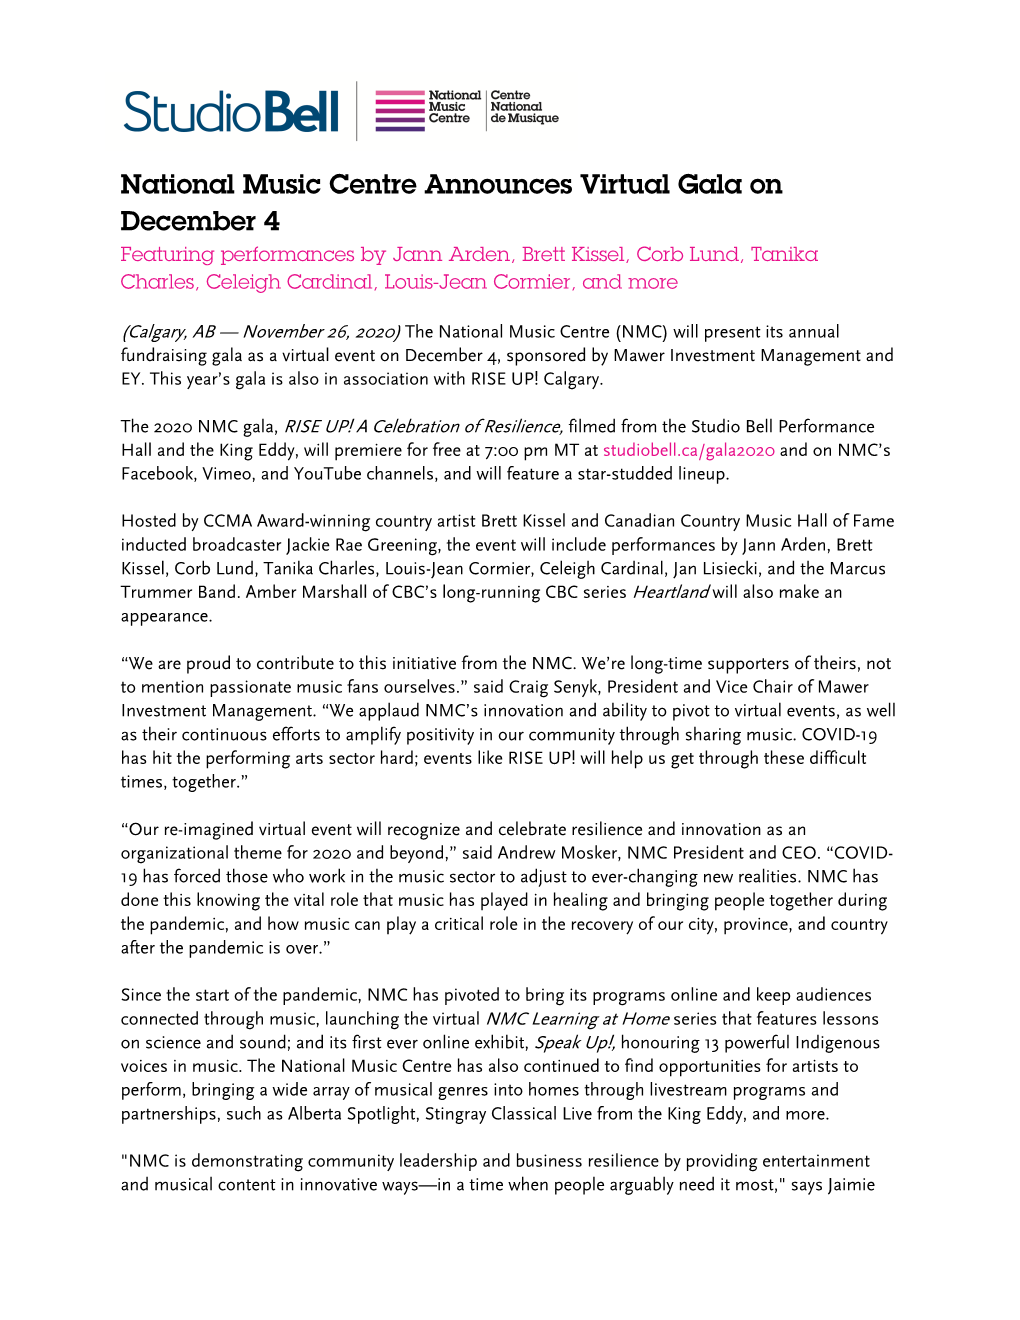 National Music Centre Announces Virtual Gala on December 4